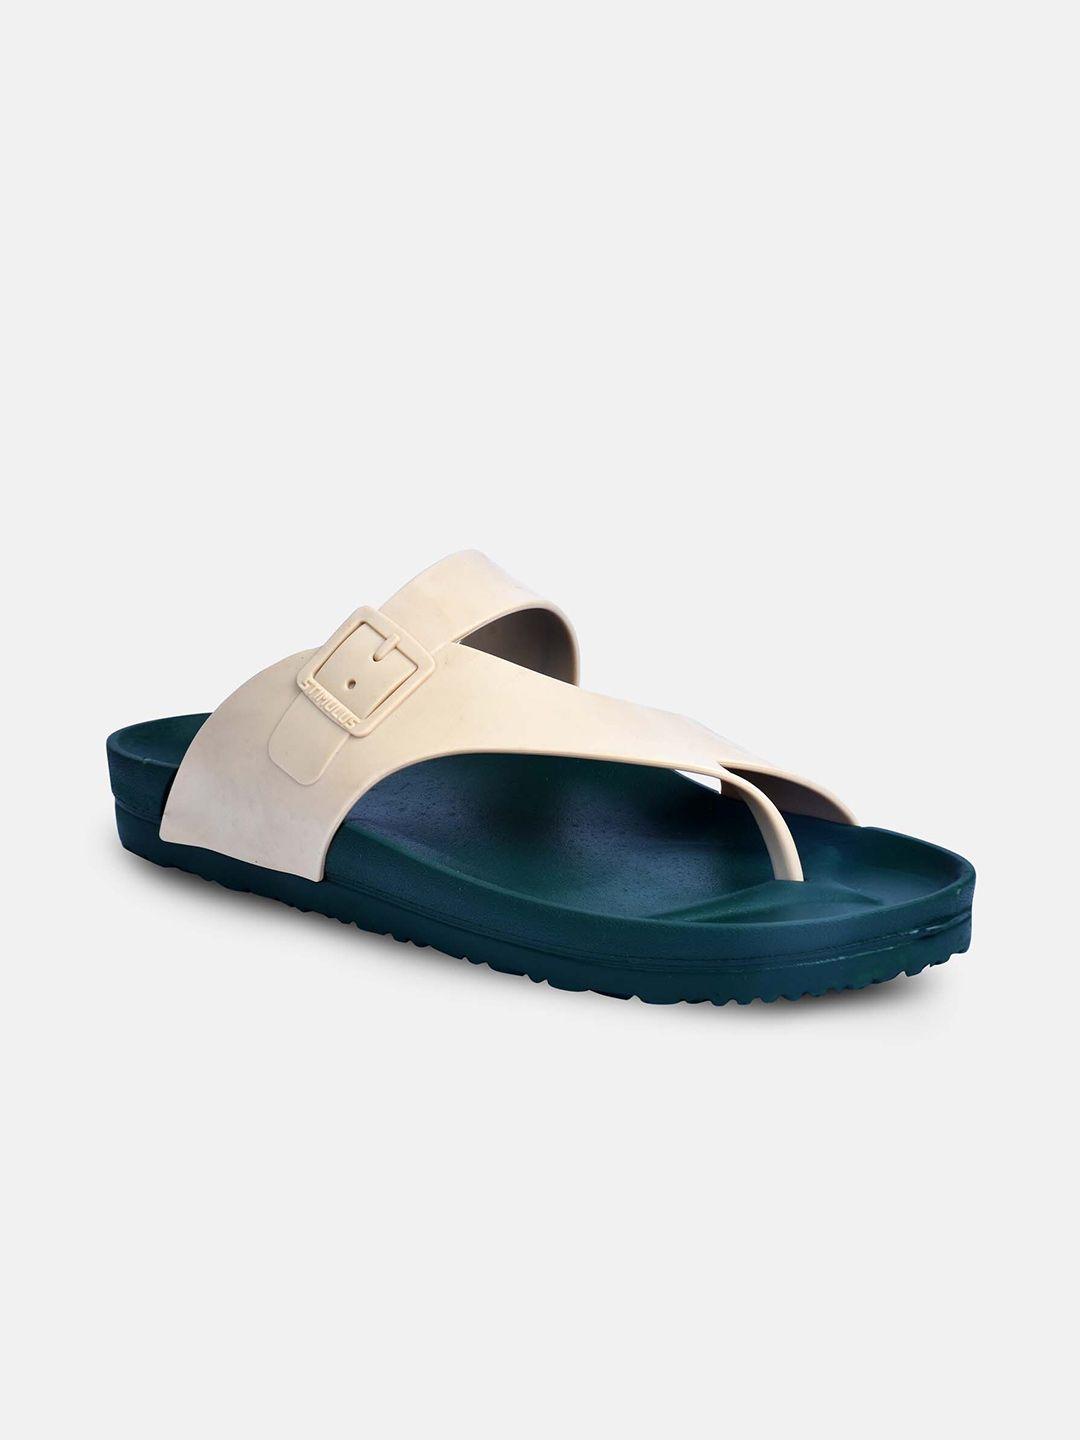 paragon men olive green & white comfort sandals